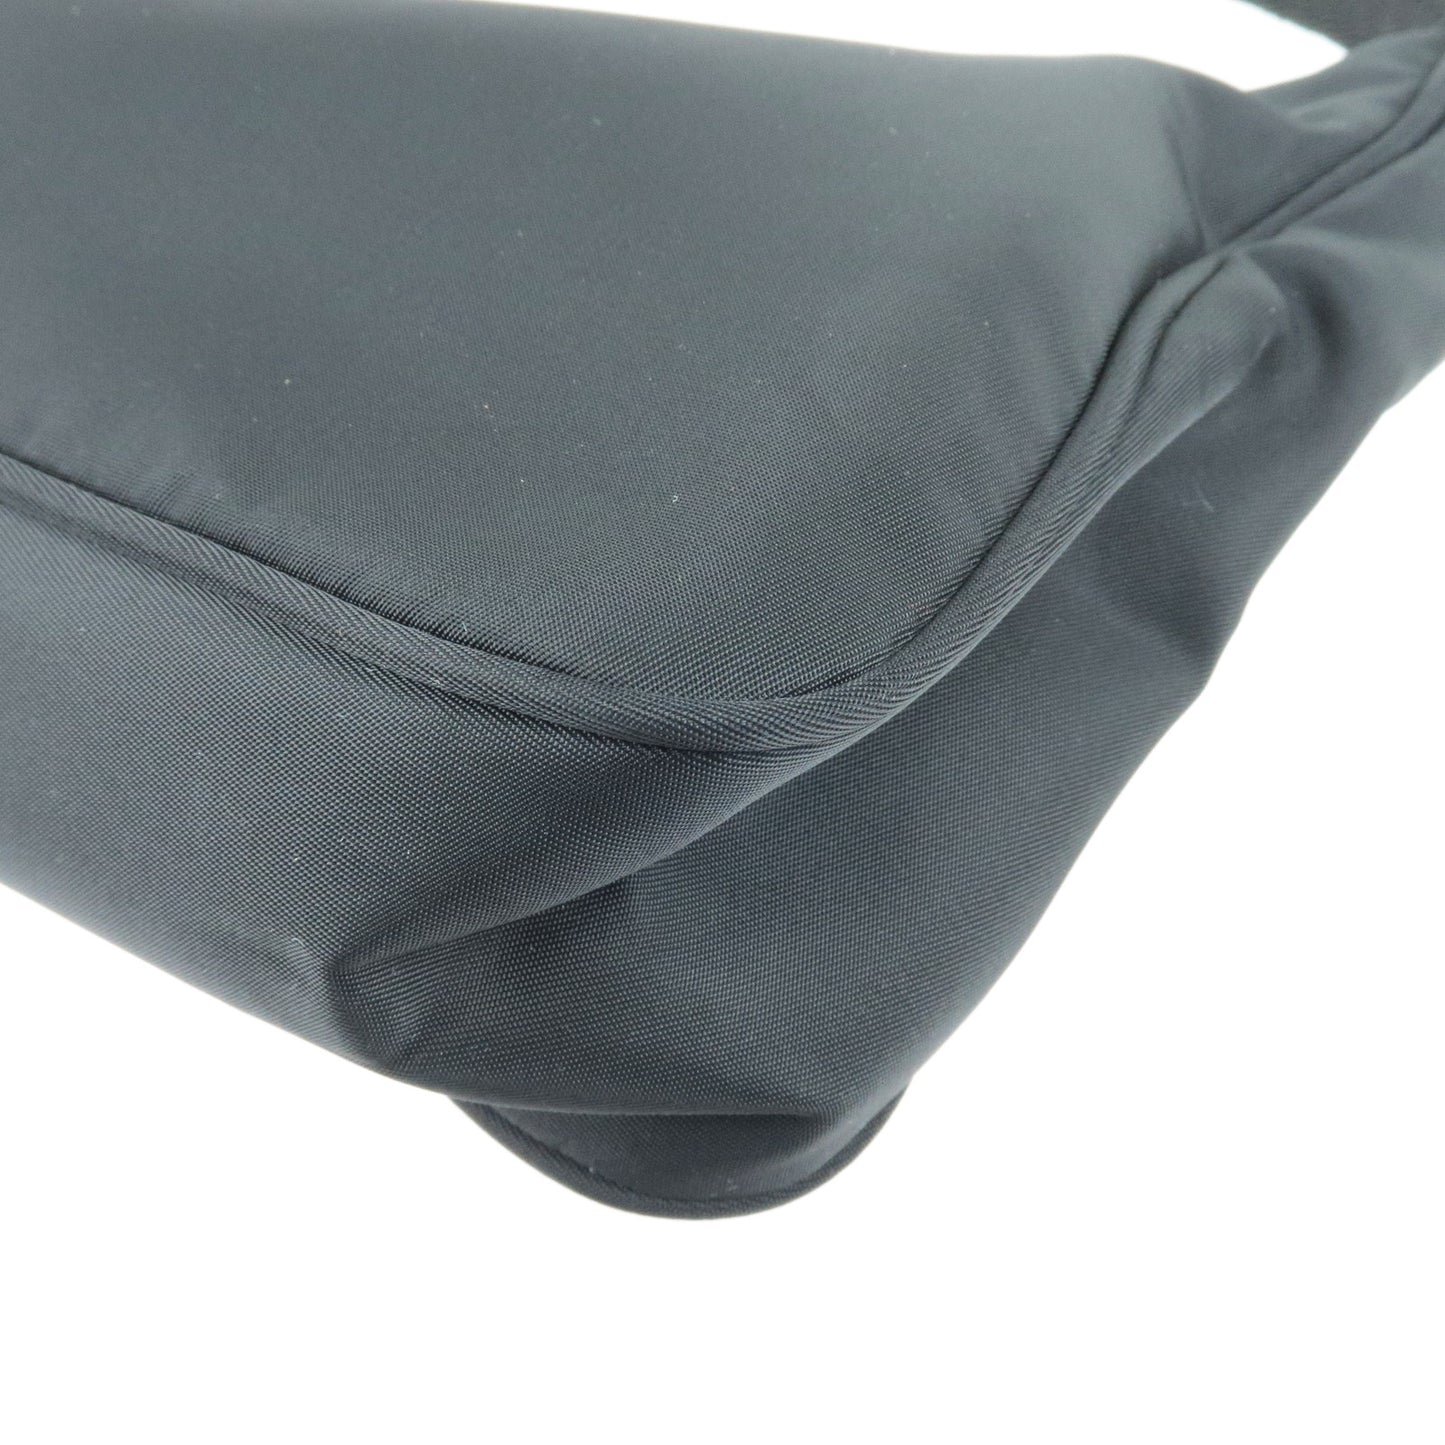 PRADA Logo Nylon Cosmetic Pouch Hand Bag Clutch Bag NERO Black